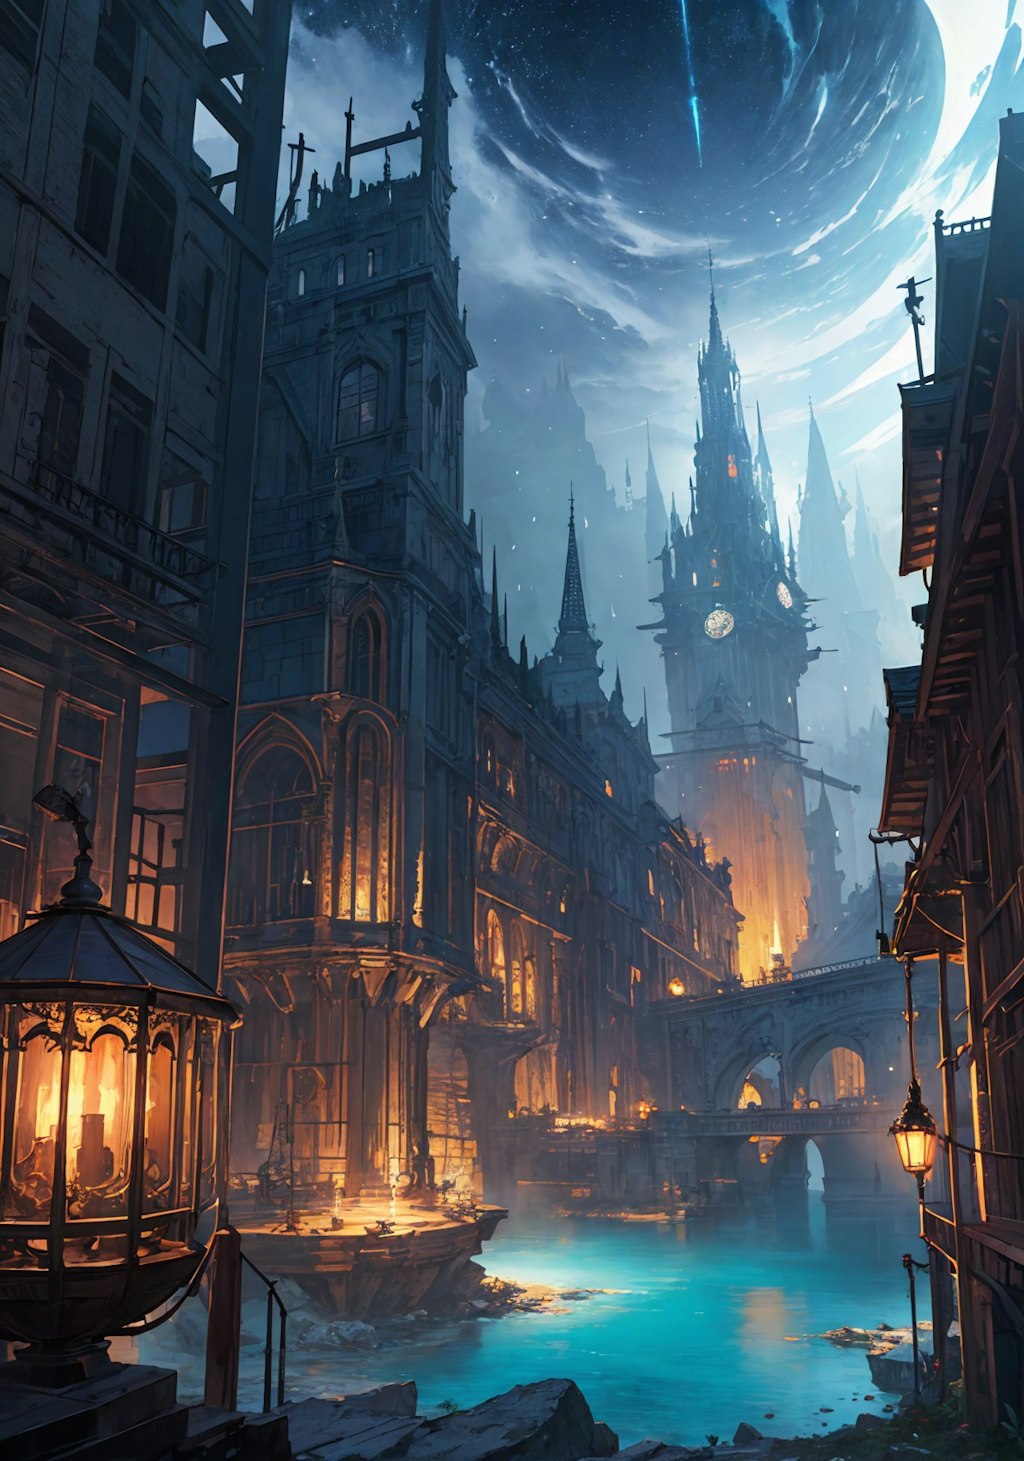 Fantasy World of Silence ファンタジーワールド オブ サイレンスが発売中です！